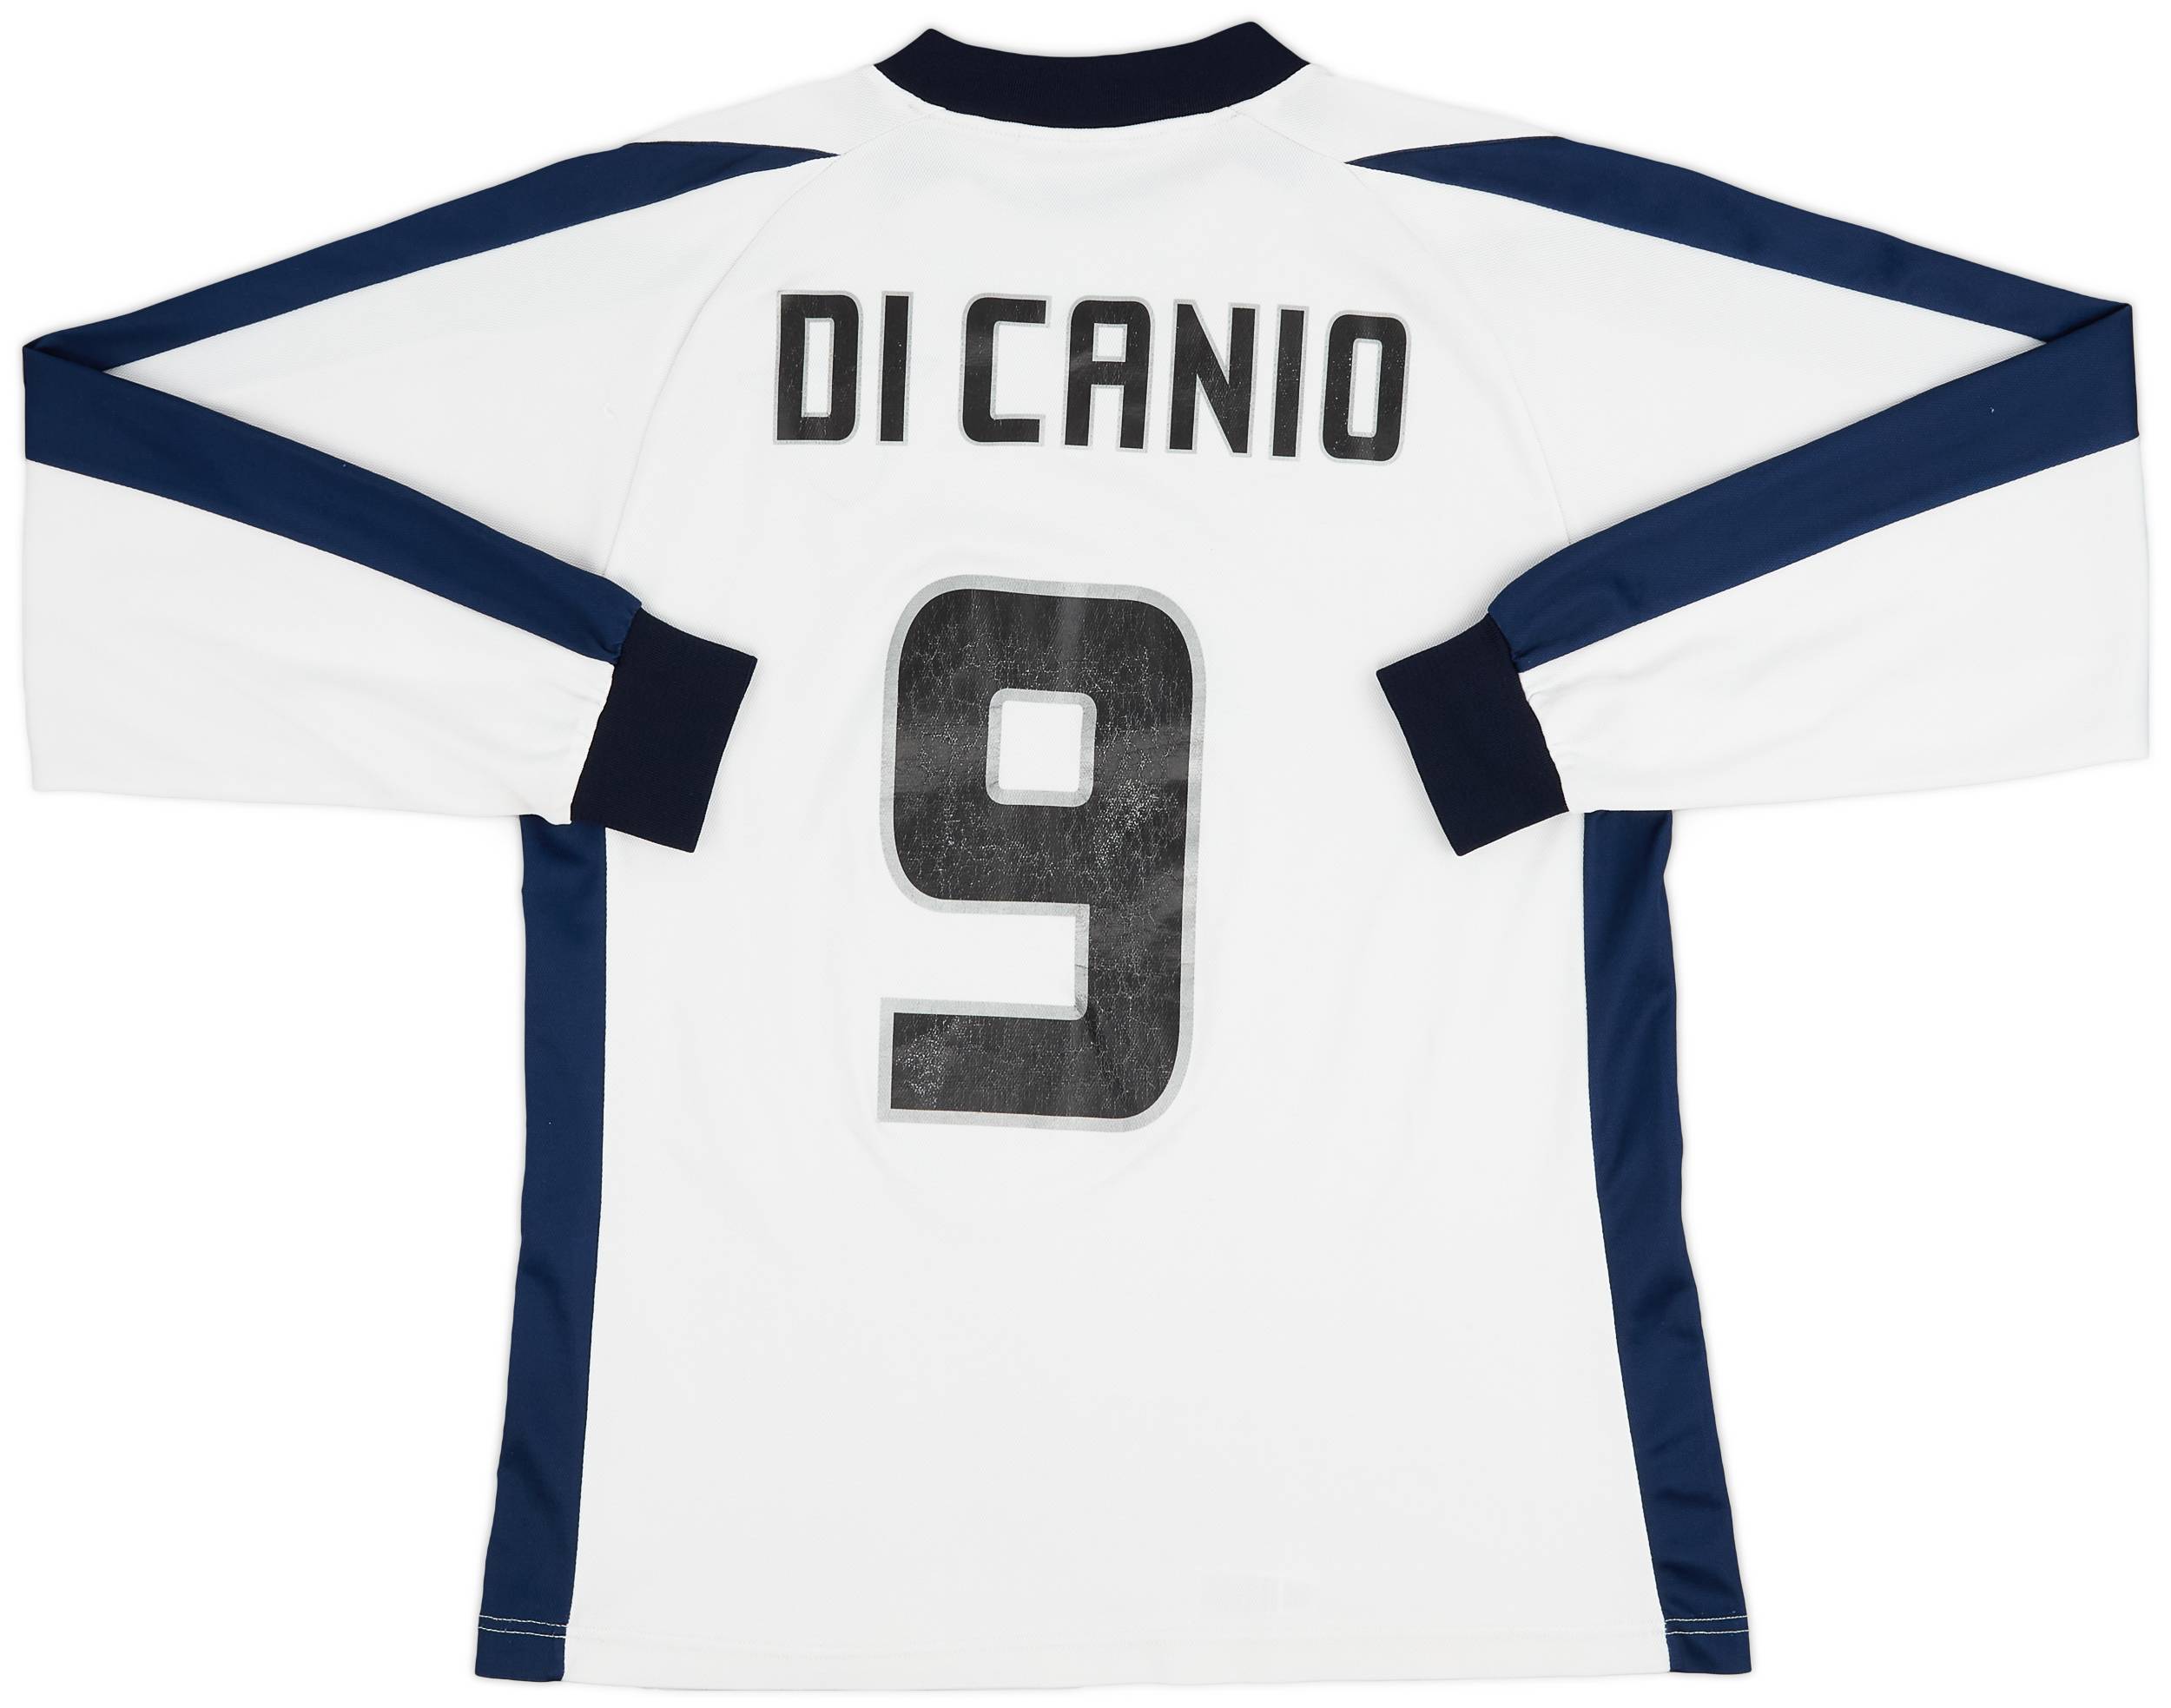 2003-04 Lazio Away L/S Shirt Di Canio #9 - 7/10 - (L)